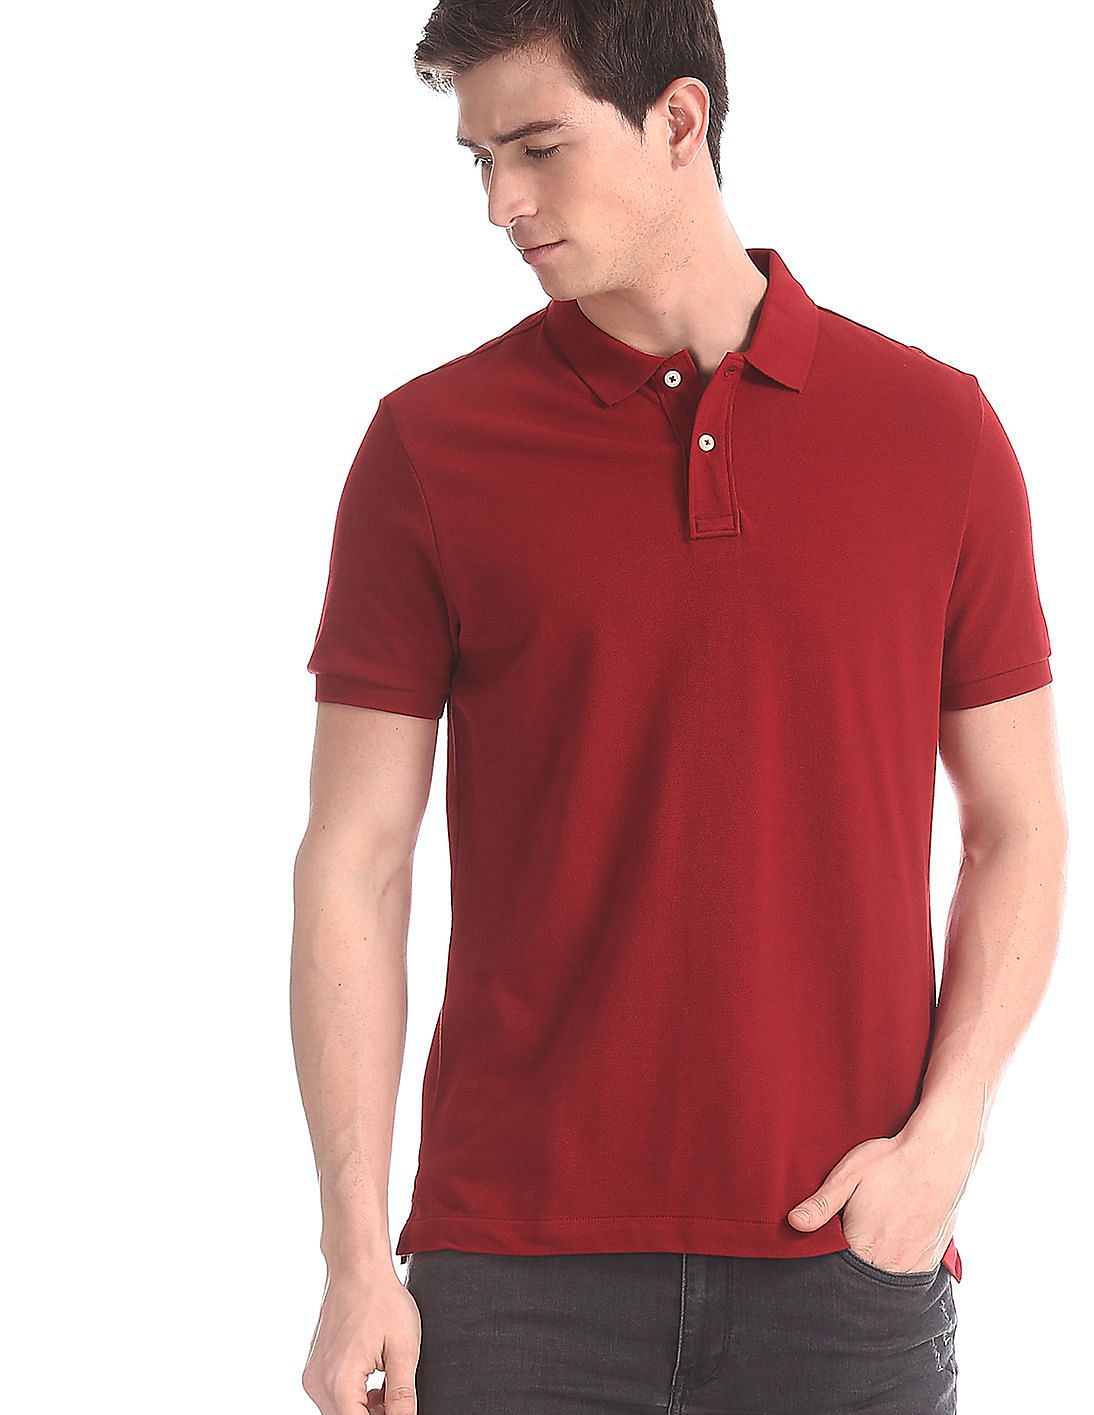 Buy Arrow Sports Red Solid Pique Polo Shirt - NNNOW.com